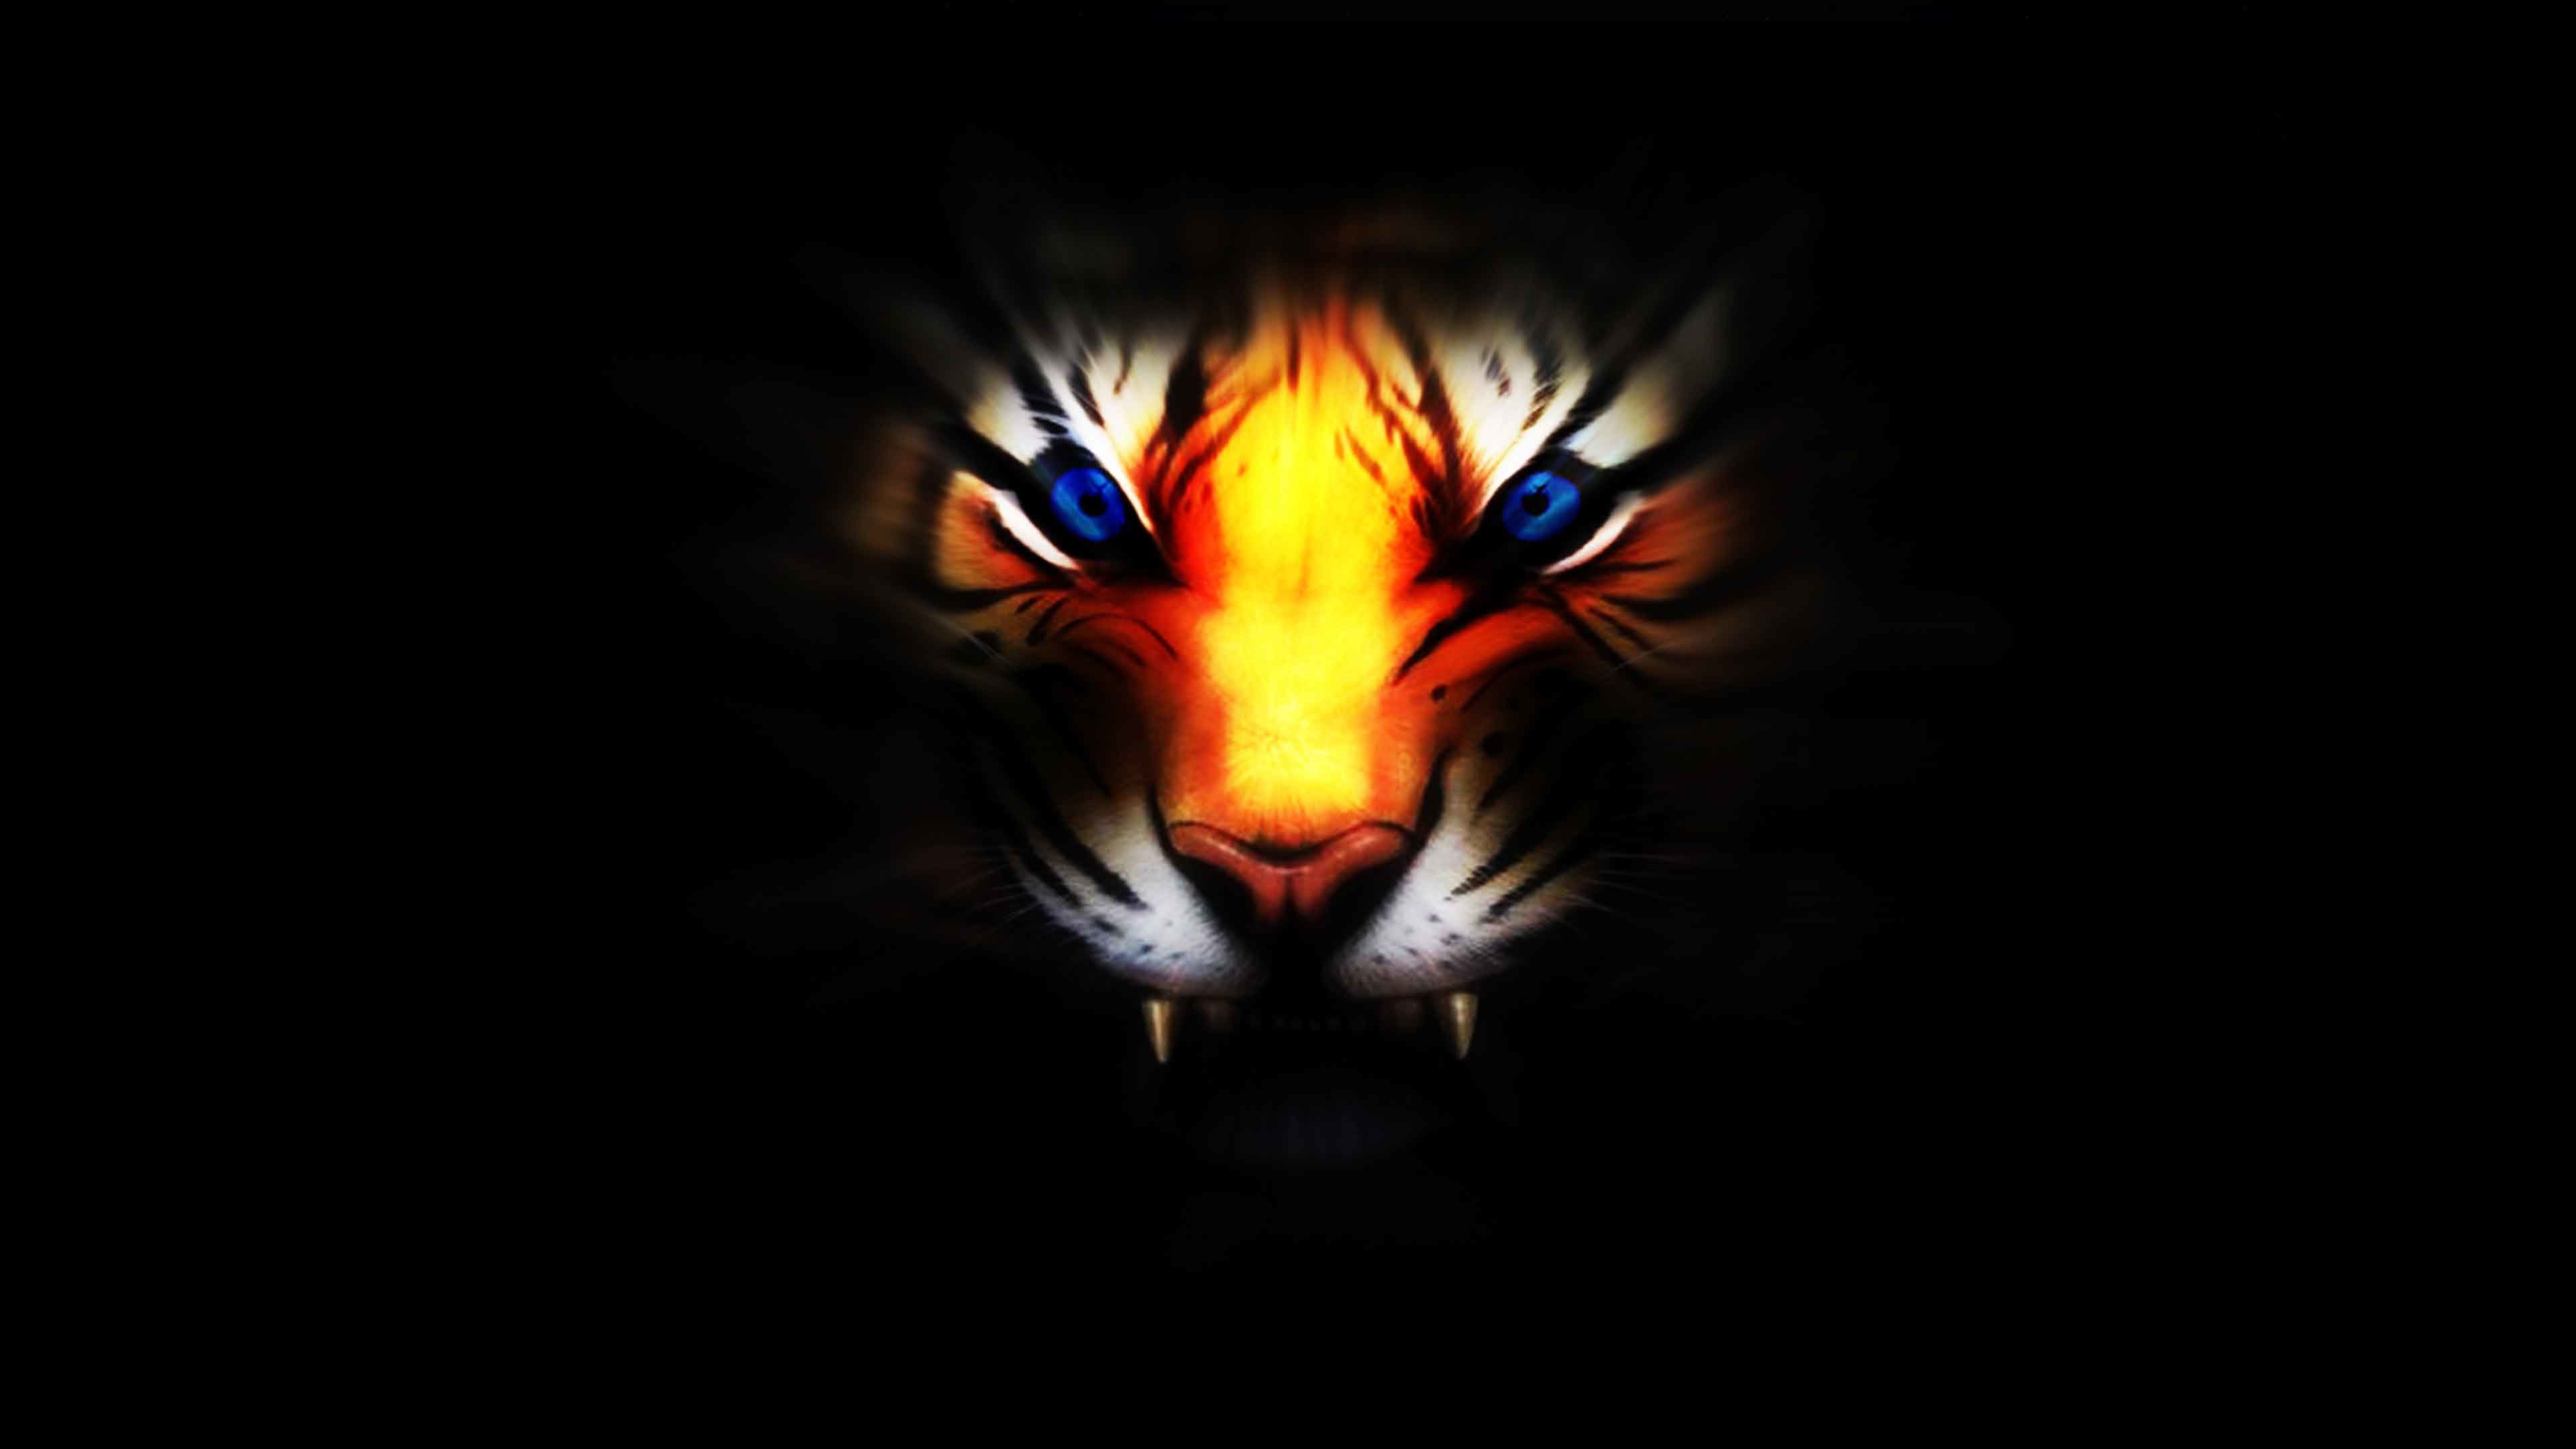 3840x2160 Tiger Wallpaper 3d | Animals Wallpapers | Pinterest | Tiger wallpaper,  Tigers and Wallpaper